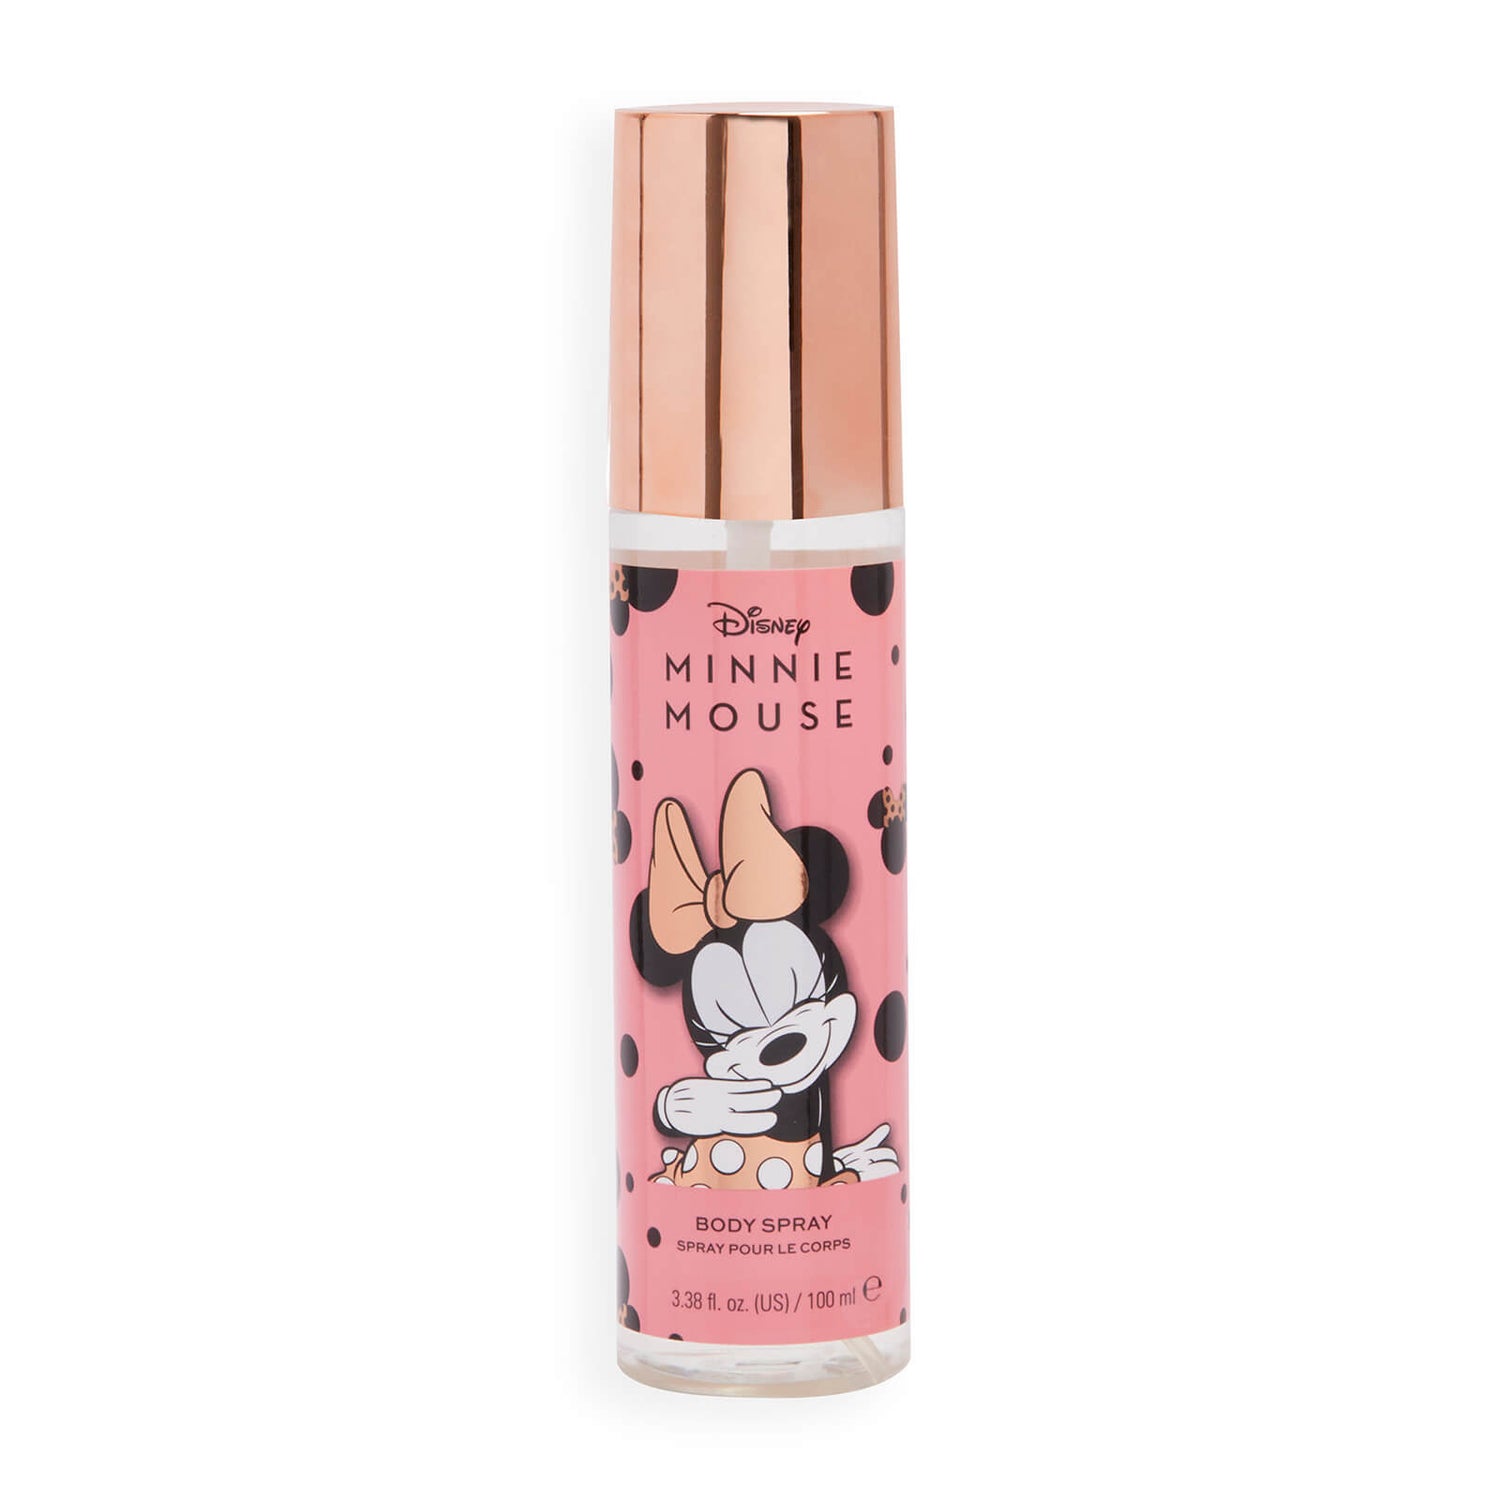 Revolution Disney’s Minnie Mouse and Makeup Revolution Body spray